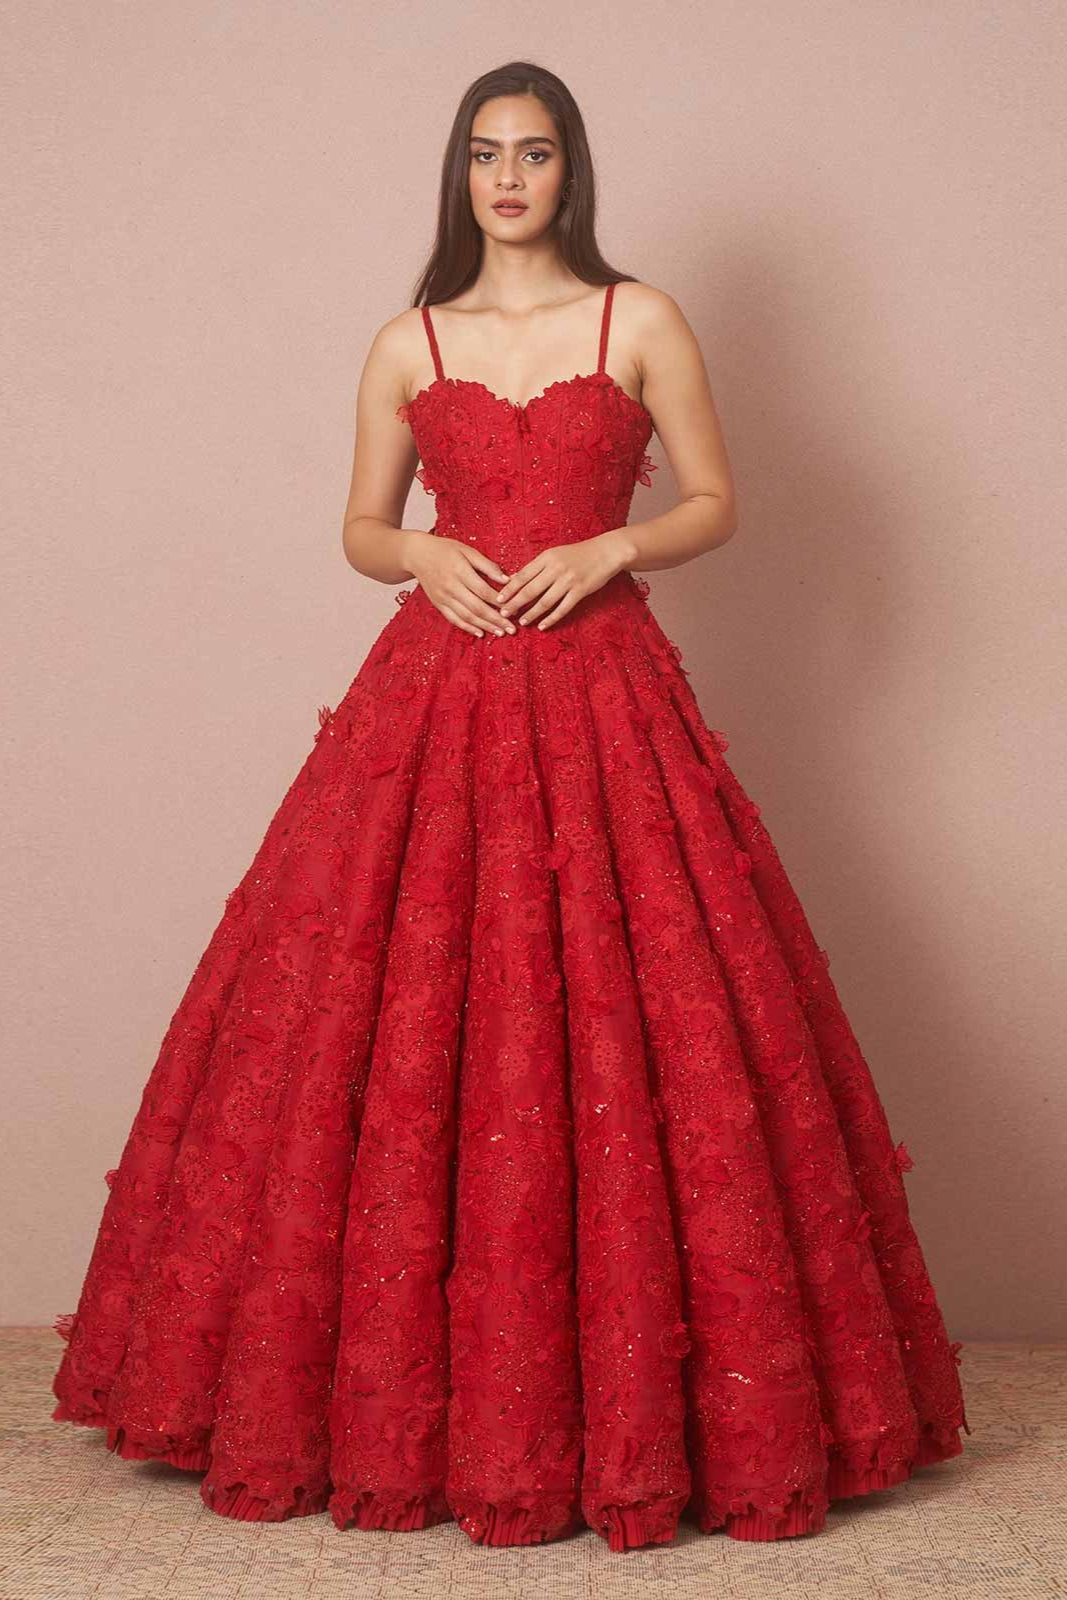 11 New Design Flower Girls Dress| Alibaba.com